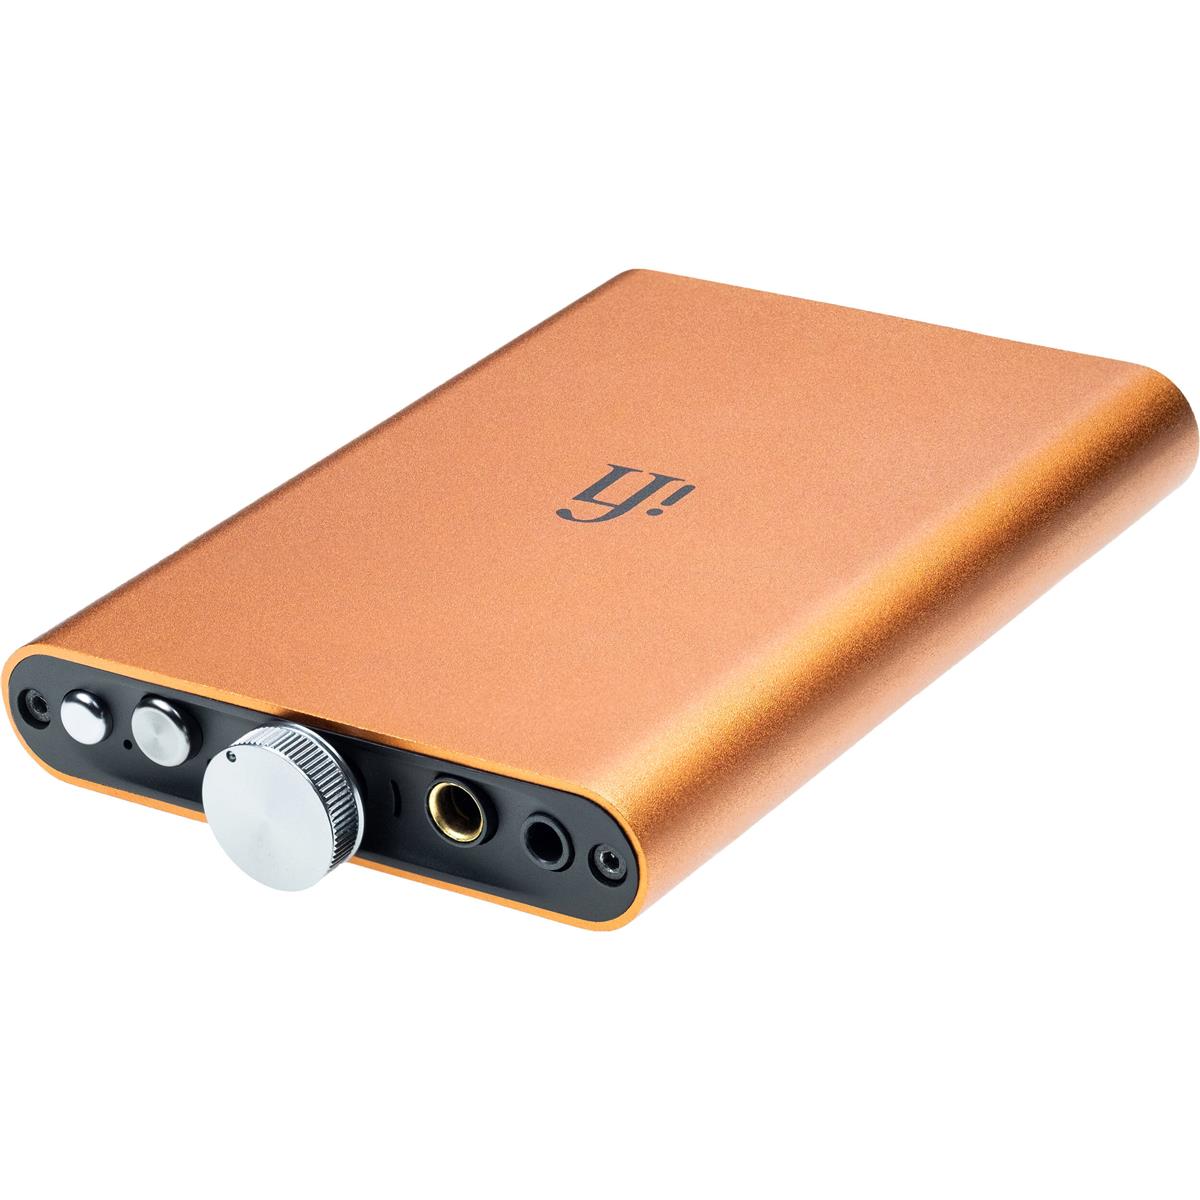 Image of iFi AUDIO hip-dac2 Portable USB DAC and Headphone Amplifier